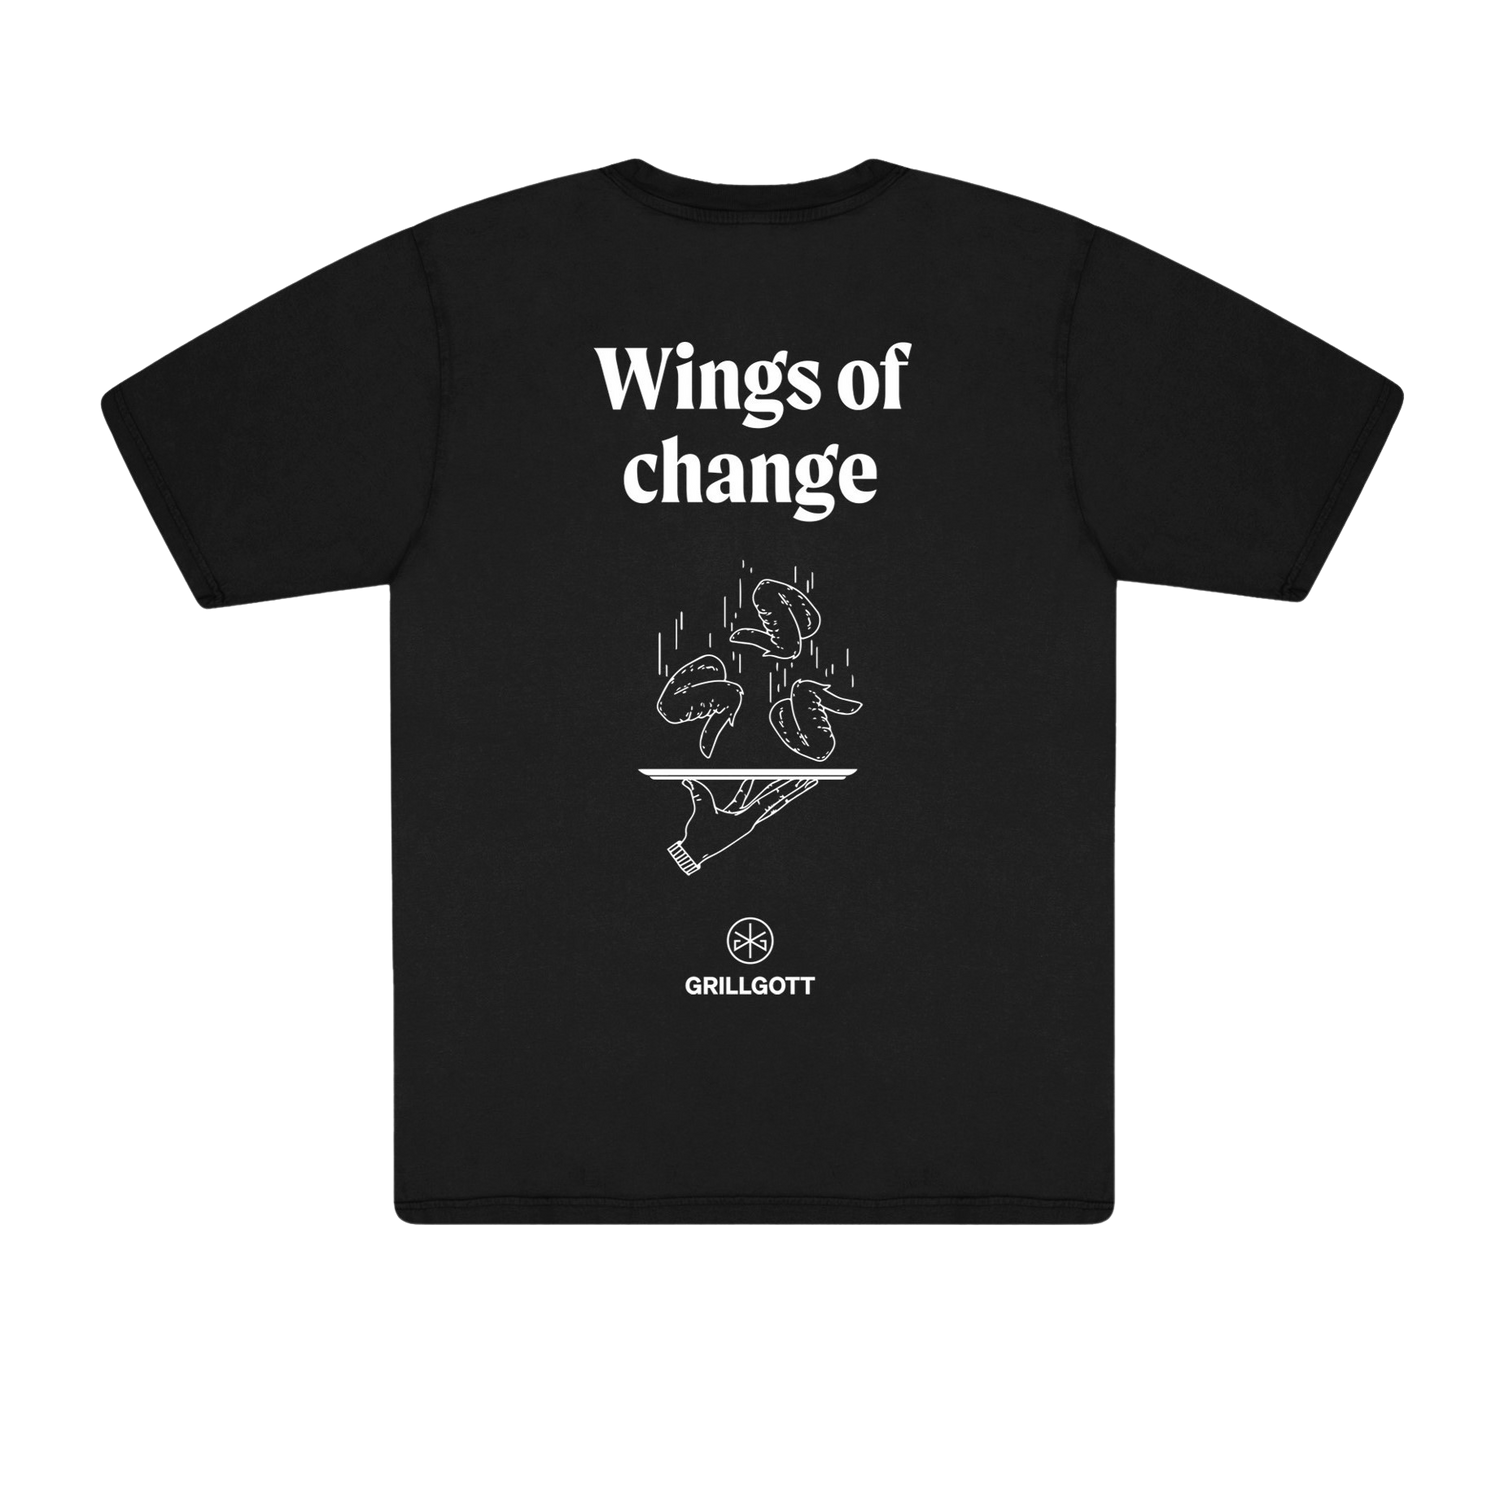 Grillgott T-Shirt L "Wings of change"